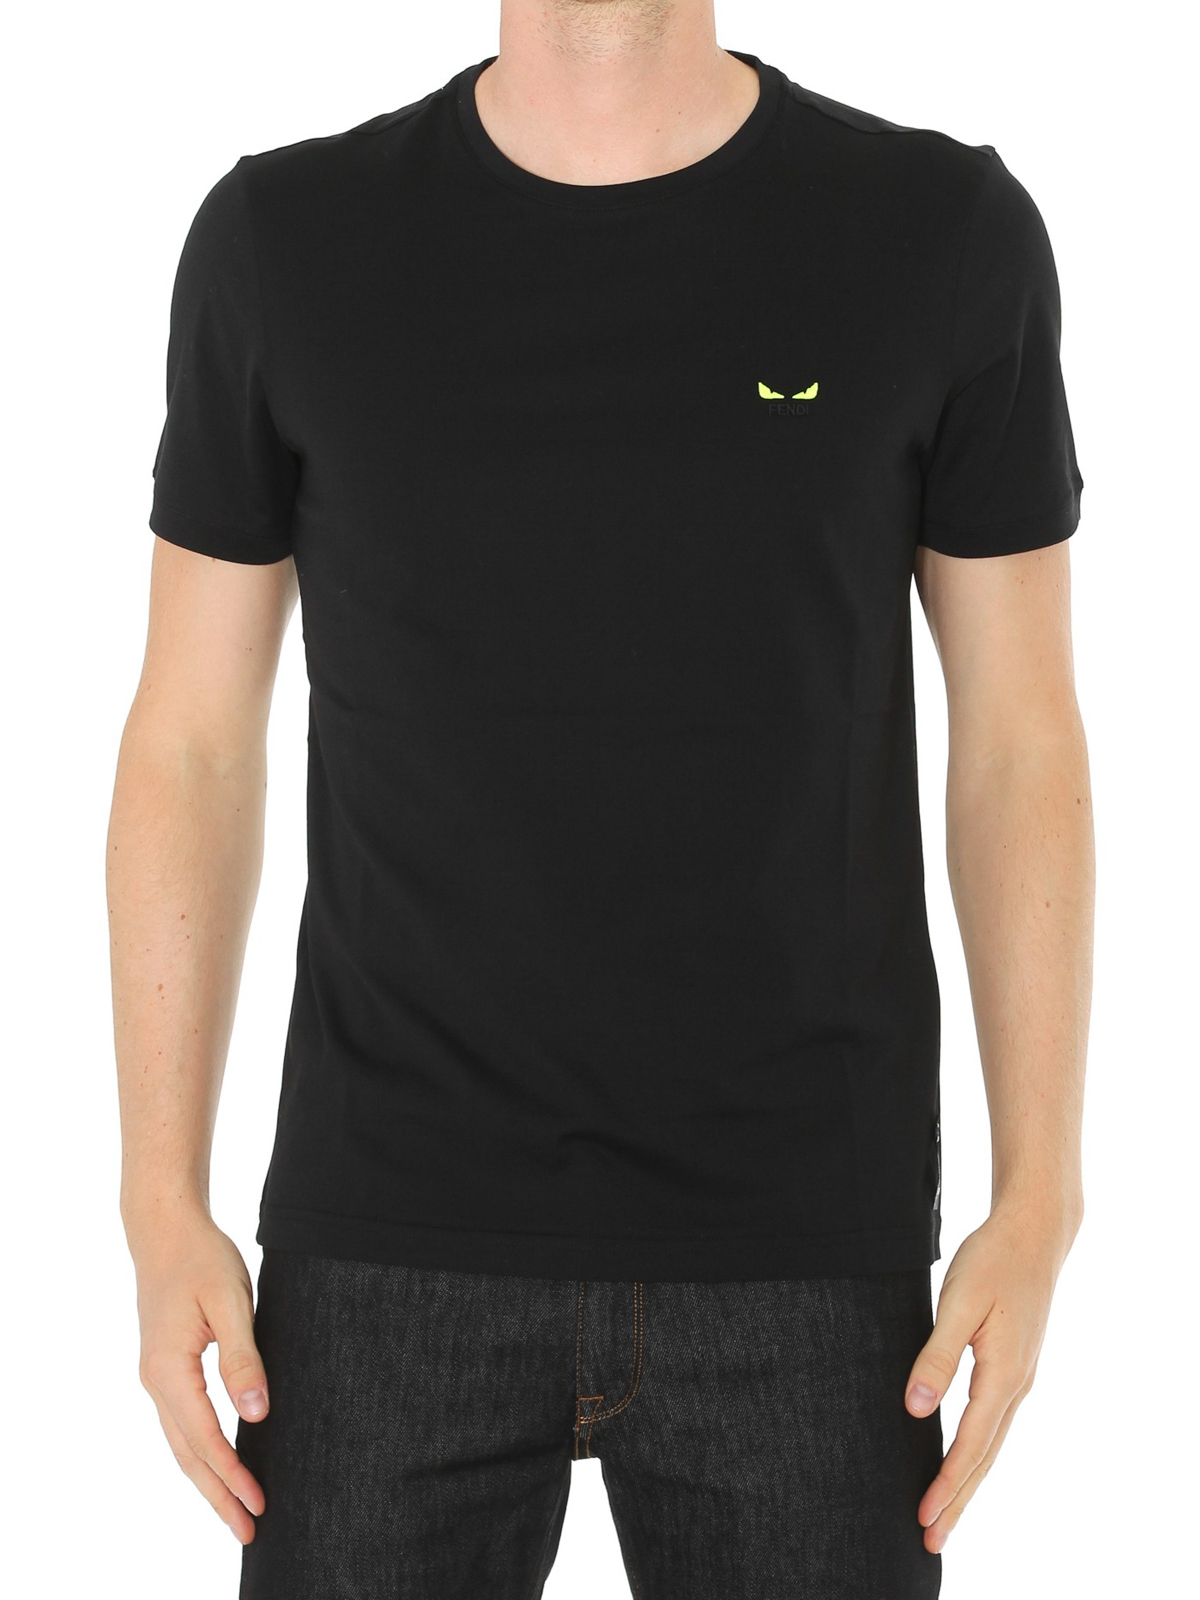 Stolthed klap garage T-shirts Fendi - Bug Eyes embroidery black T-shirt - FY0894A875F0QA1